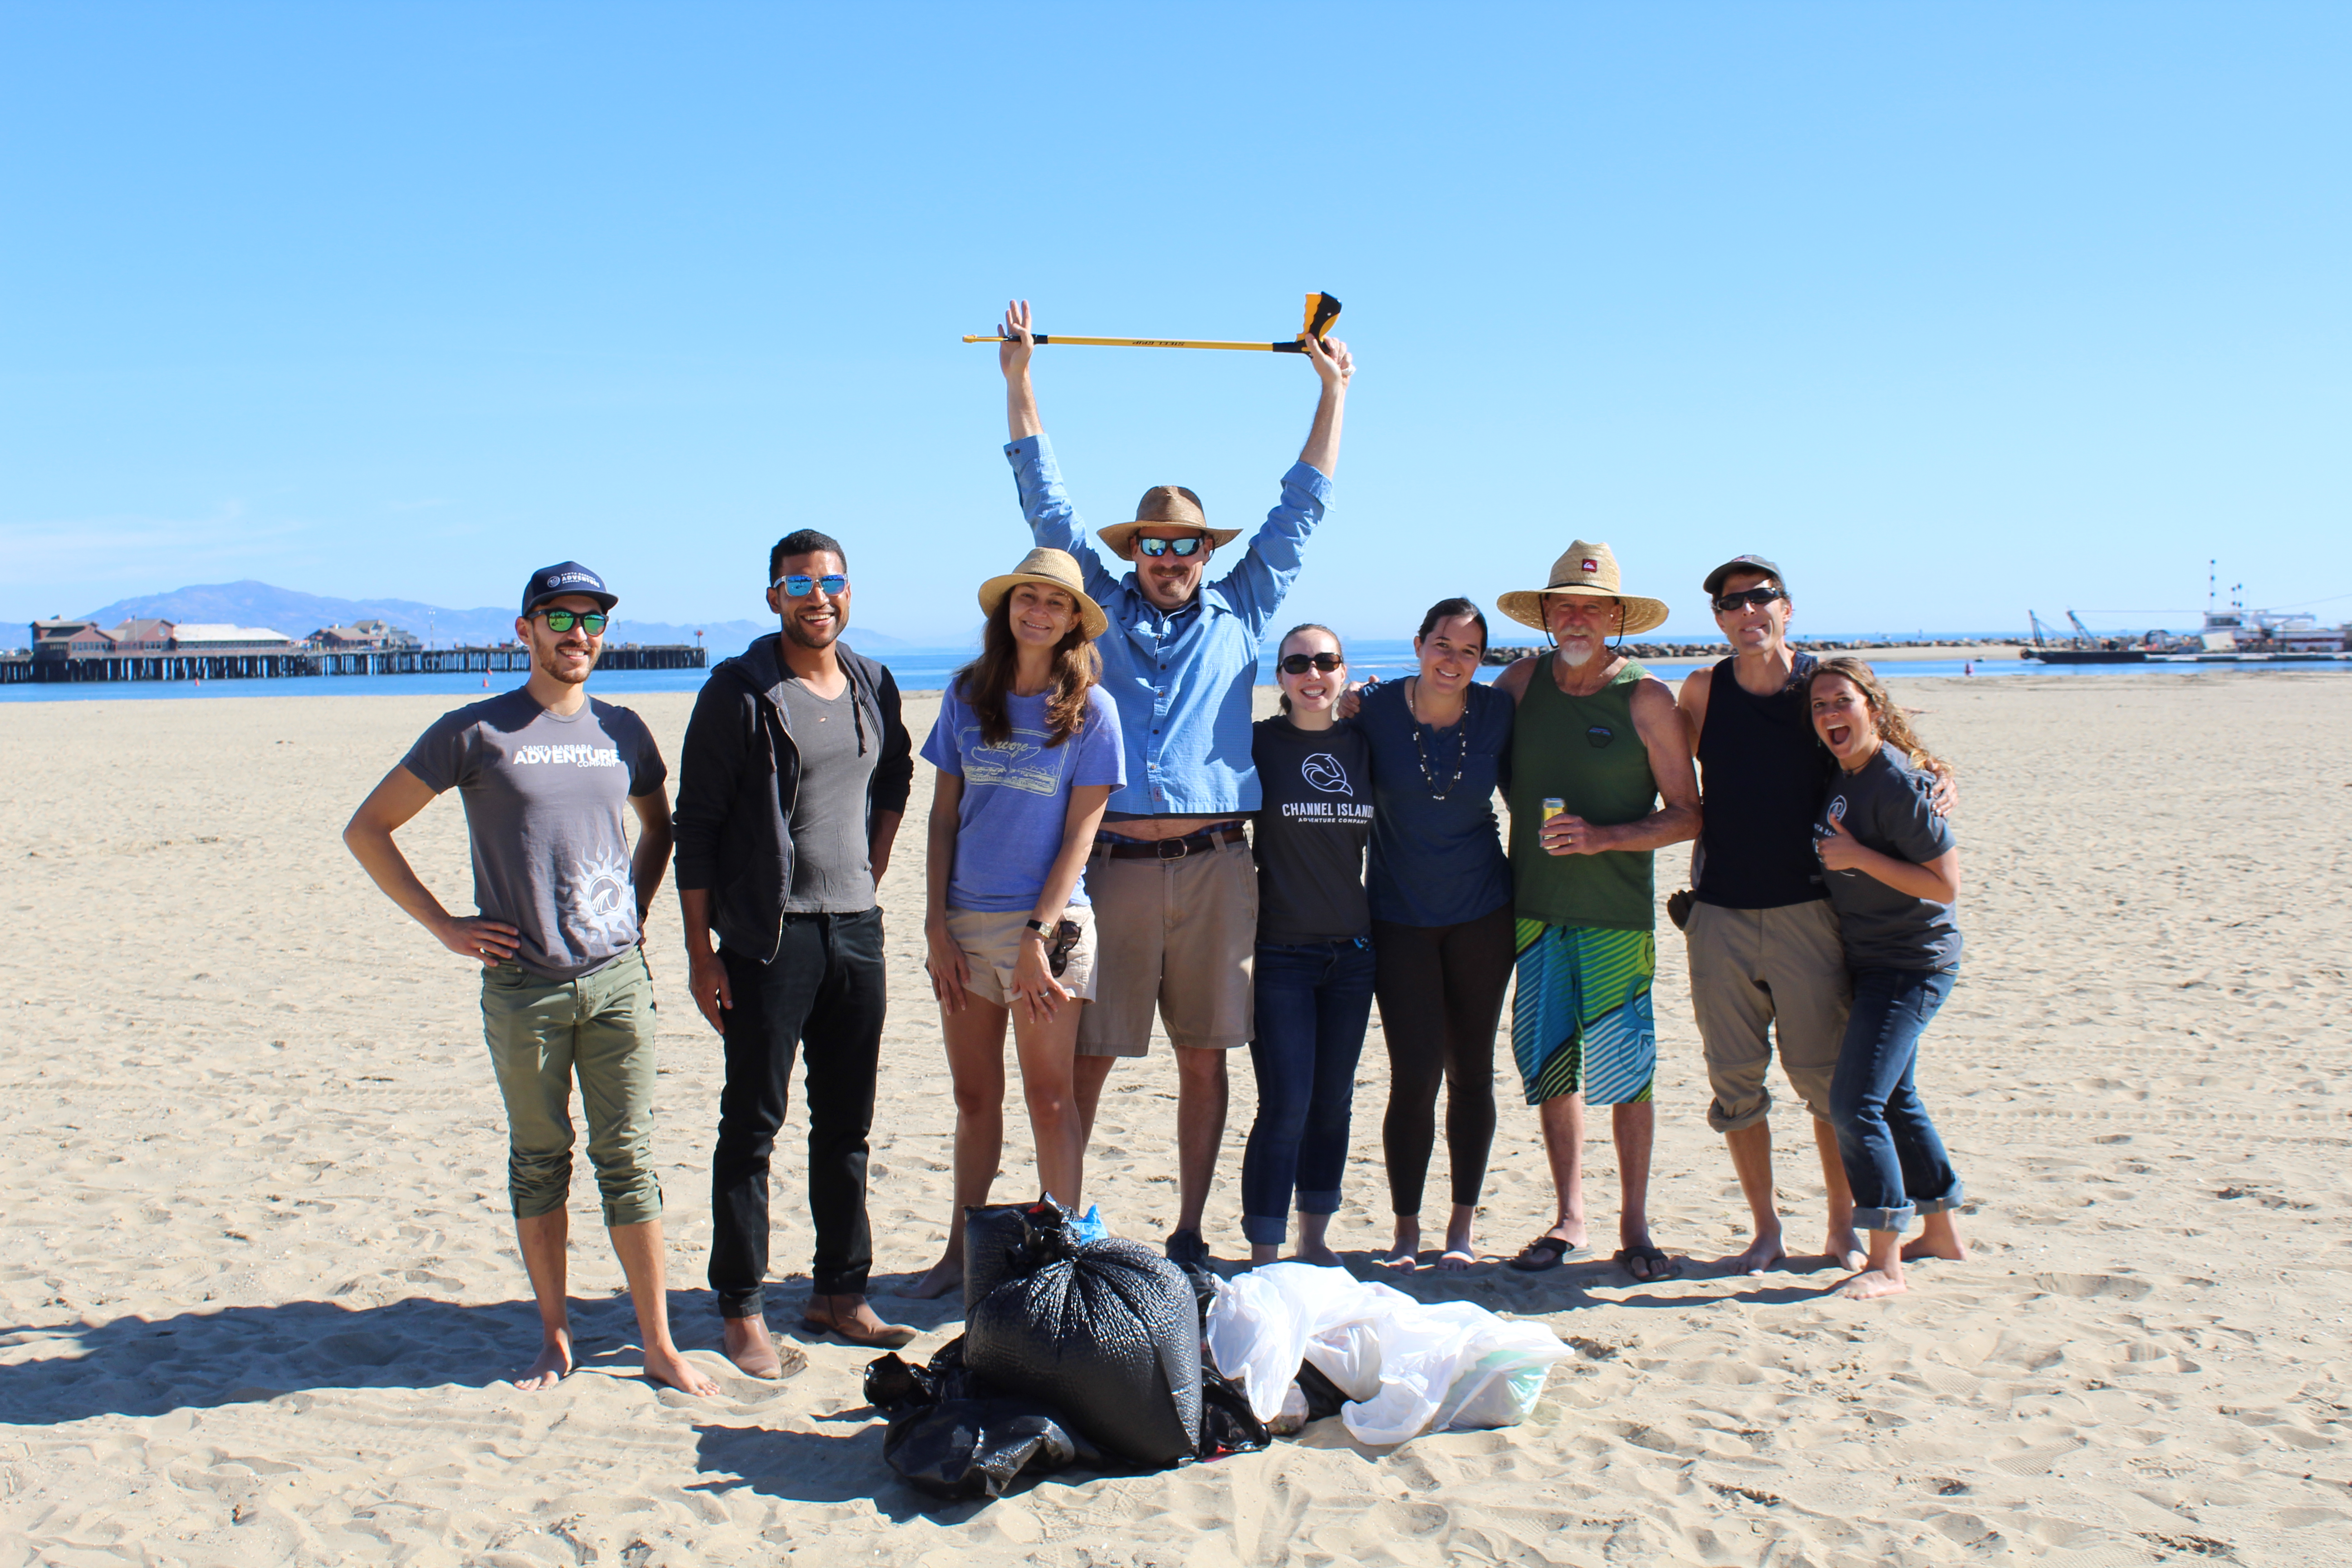 Santa Barbara Beach clean-up with the Surfrider Foundation